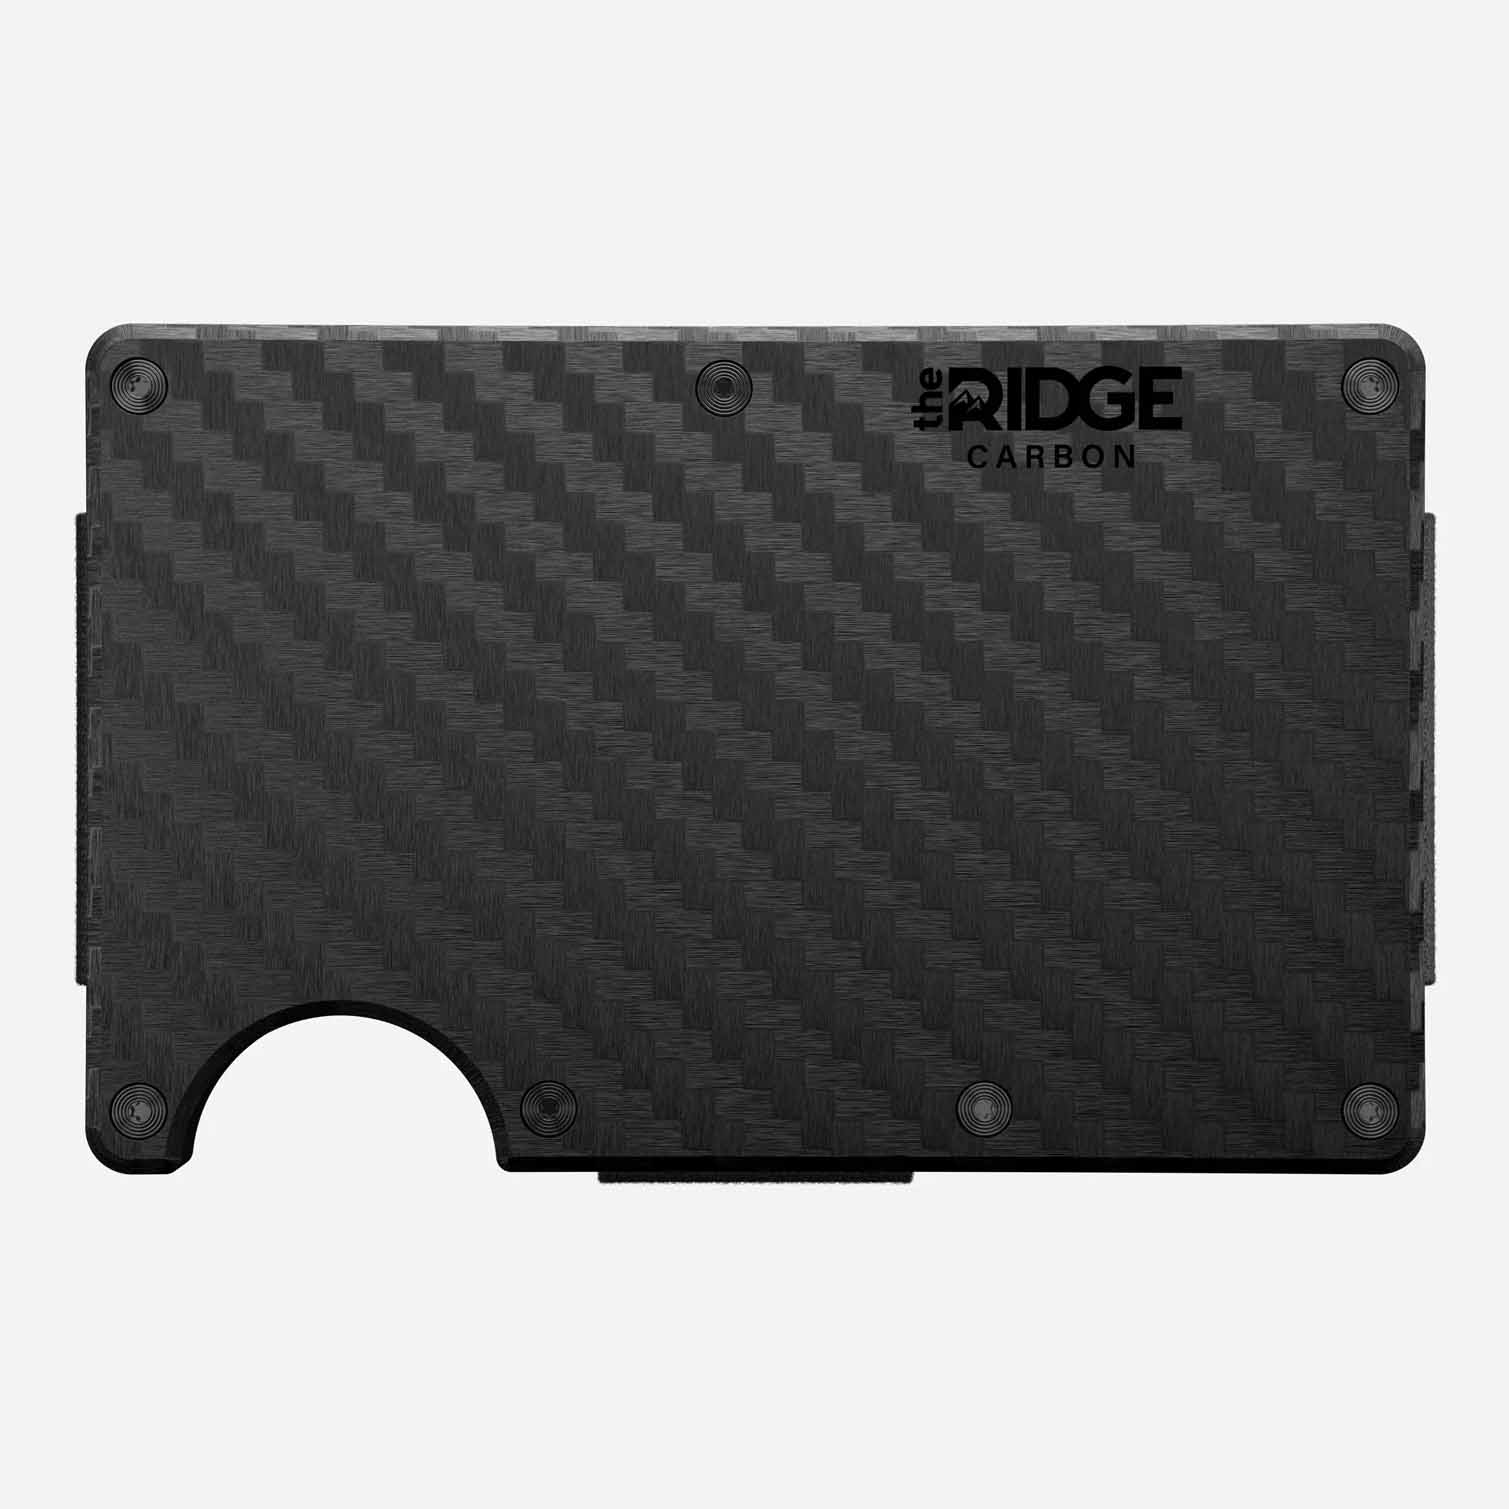 Ridge Carbon Fiber Wallet in black with RFID blocking technology 